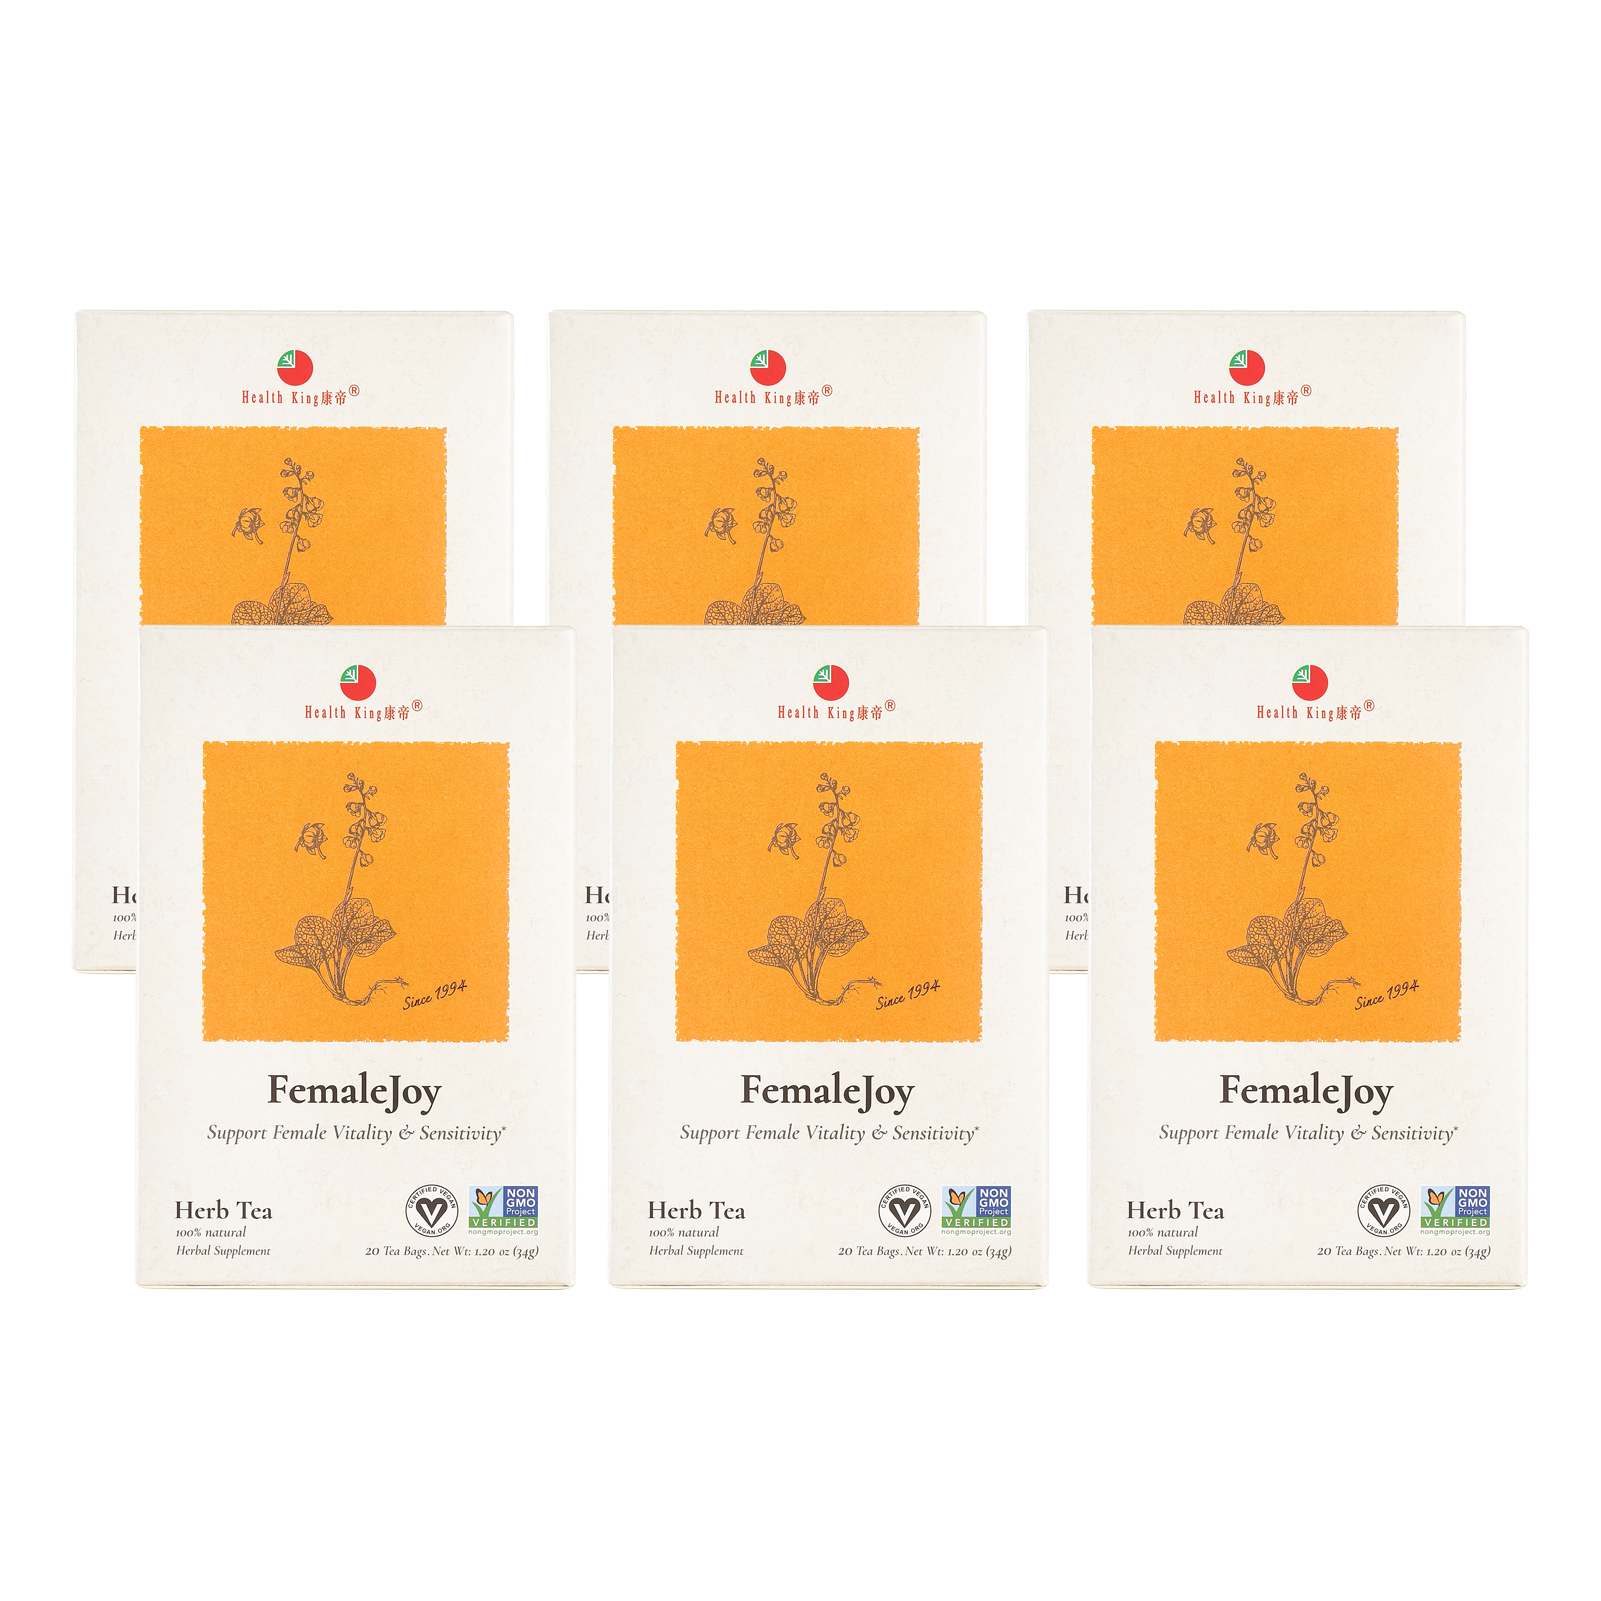 Pack of six Female Joy Herb Tea bags for enhancing female wellness